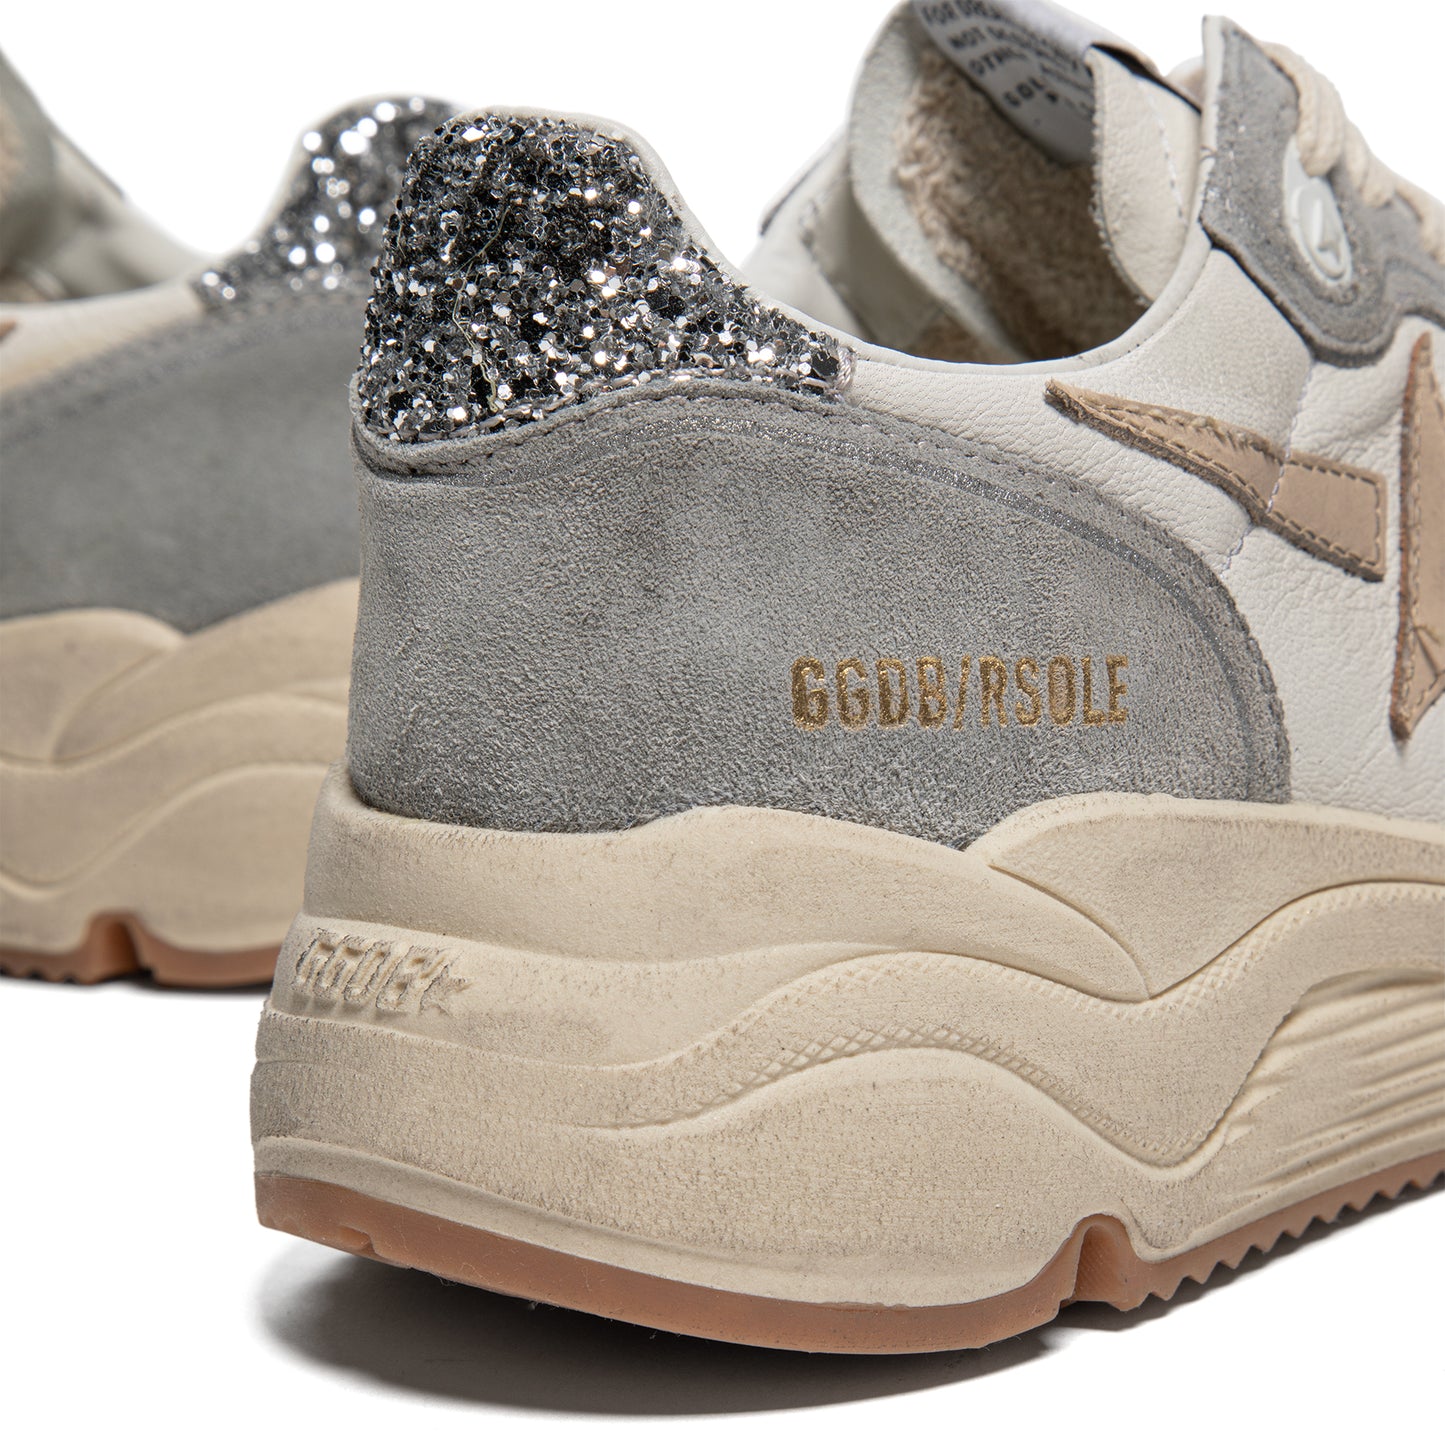 Golden Goose Running Sole Sneakers in Silver/White/Cream/Smoke Grey/Silver  – Hampden Clothing